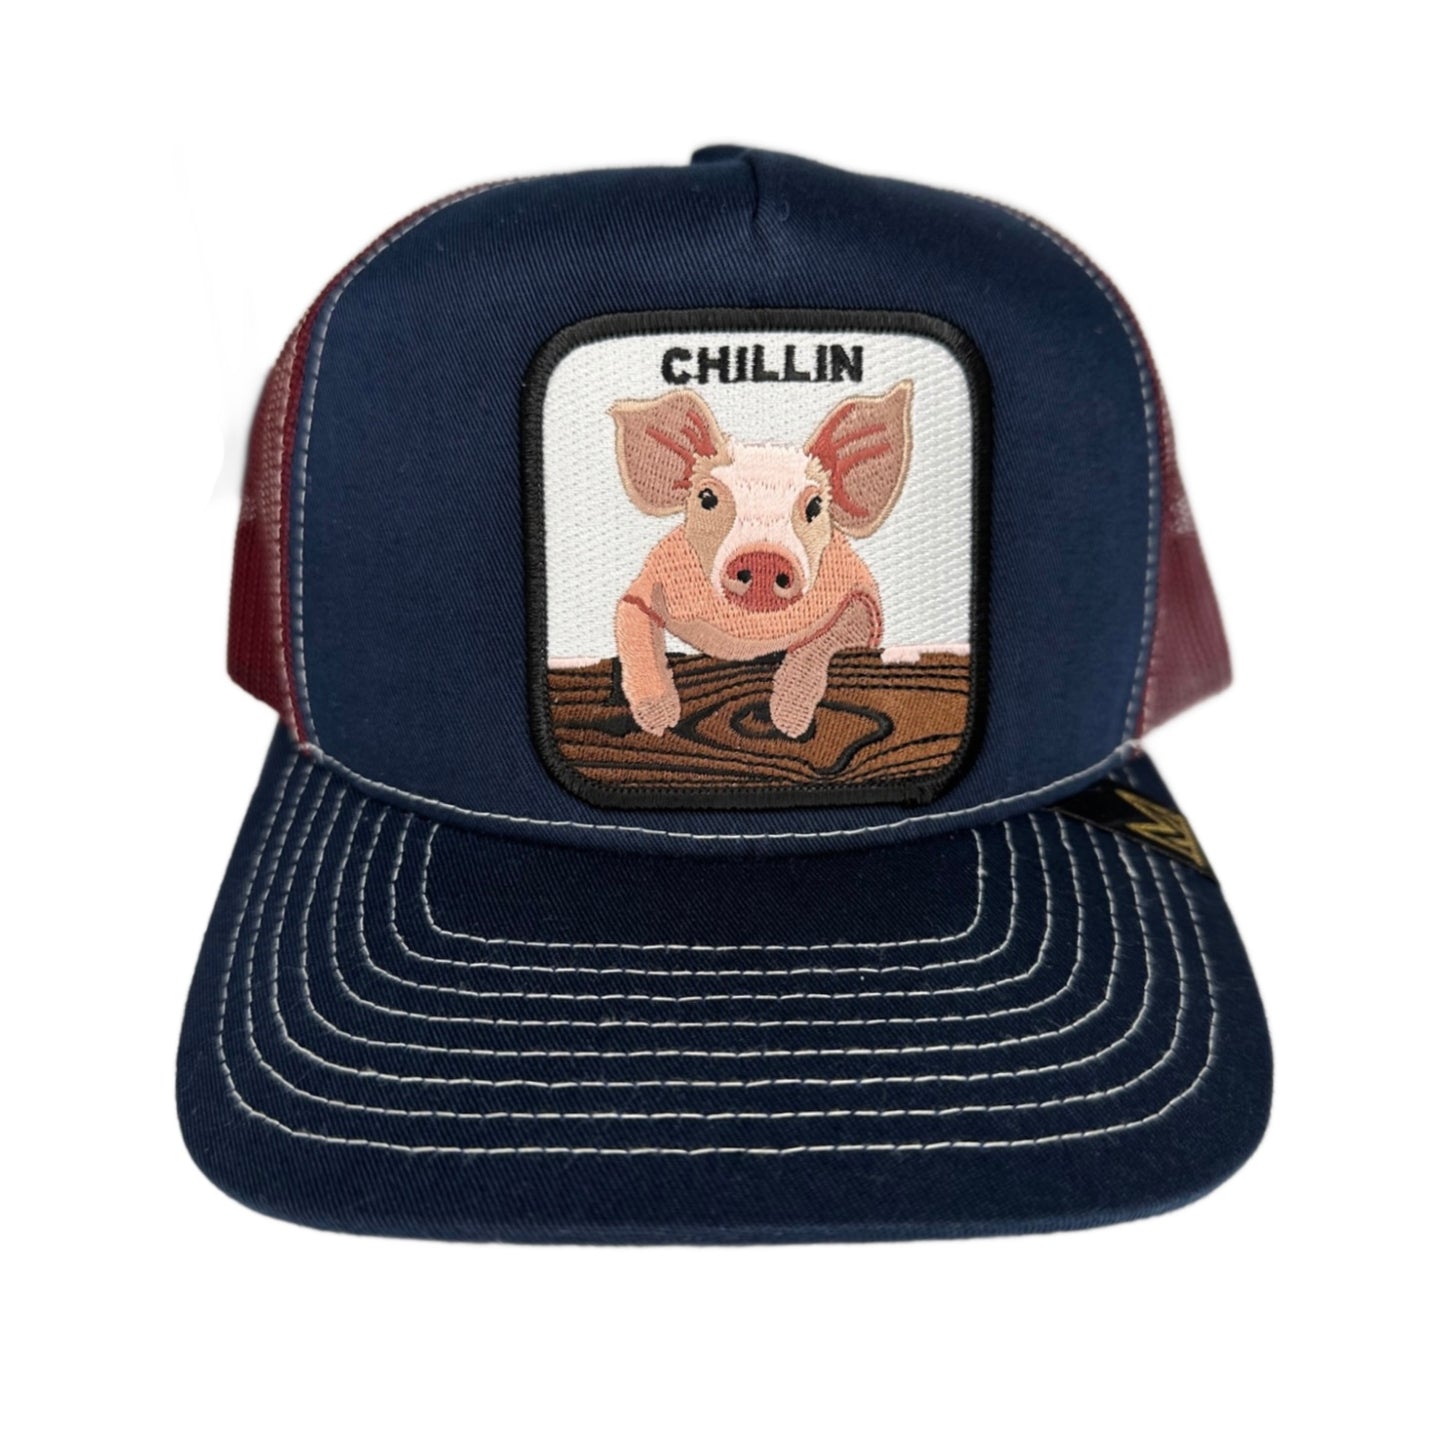 Chillin Trucker Hat